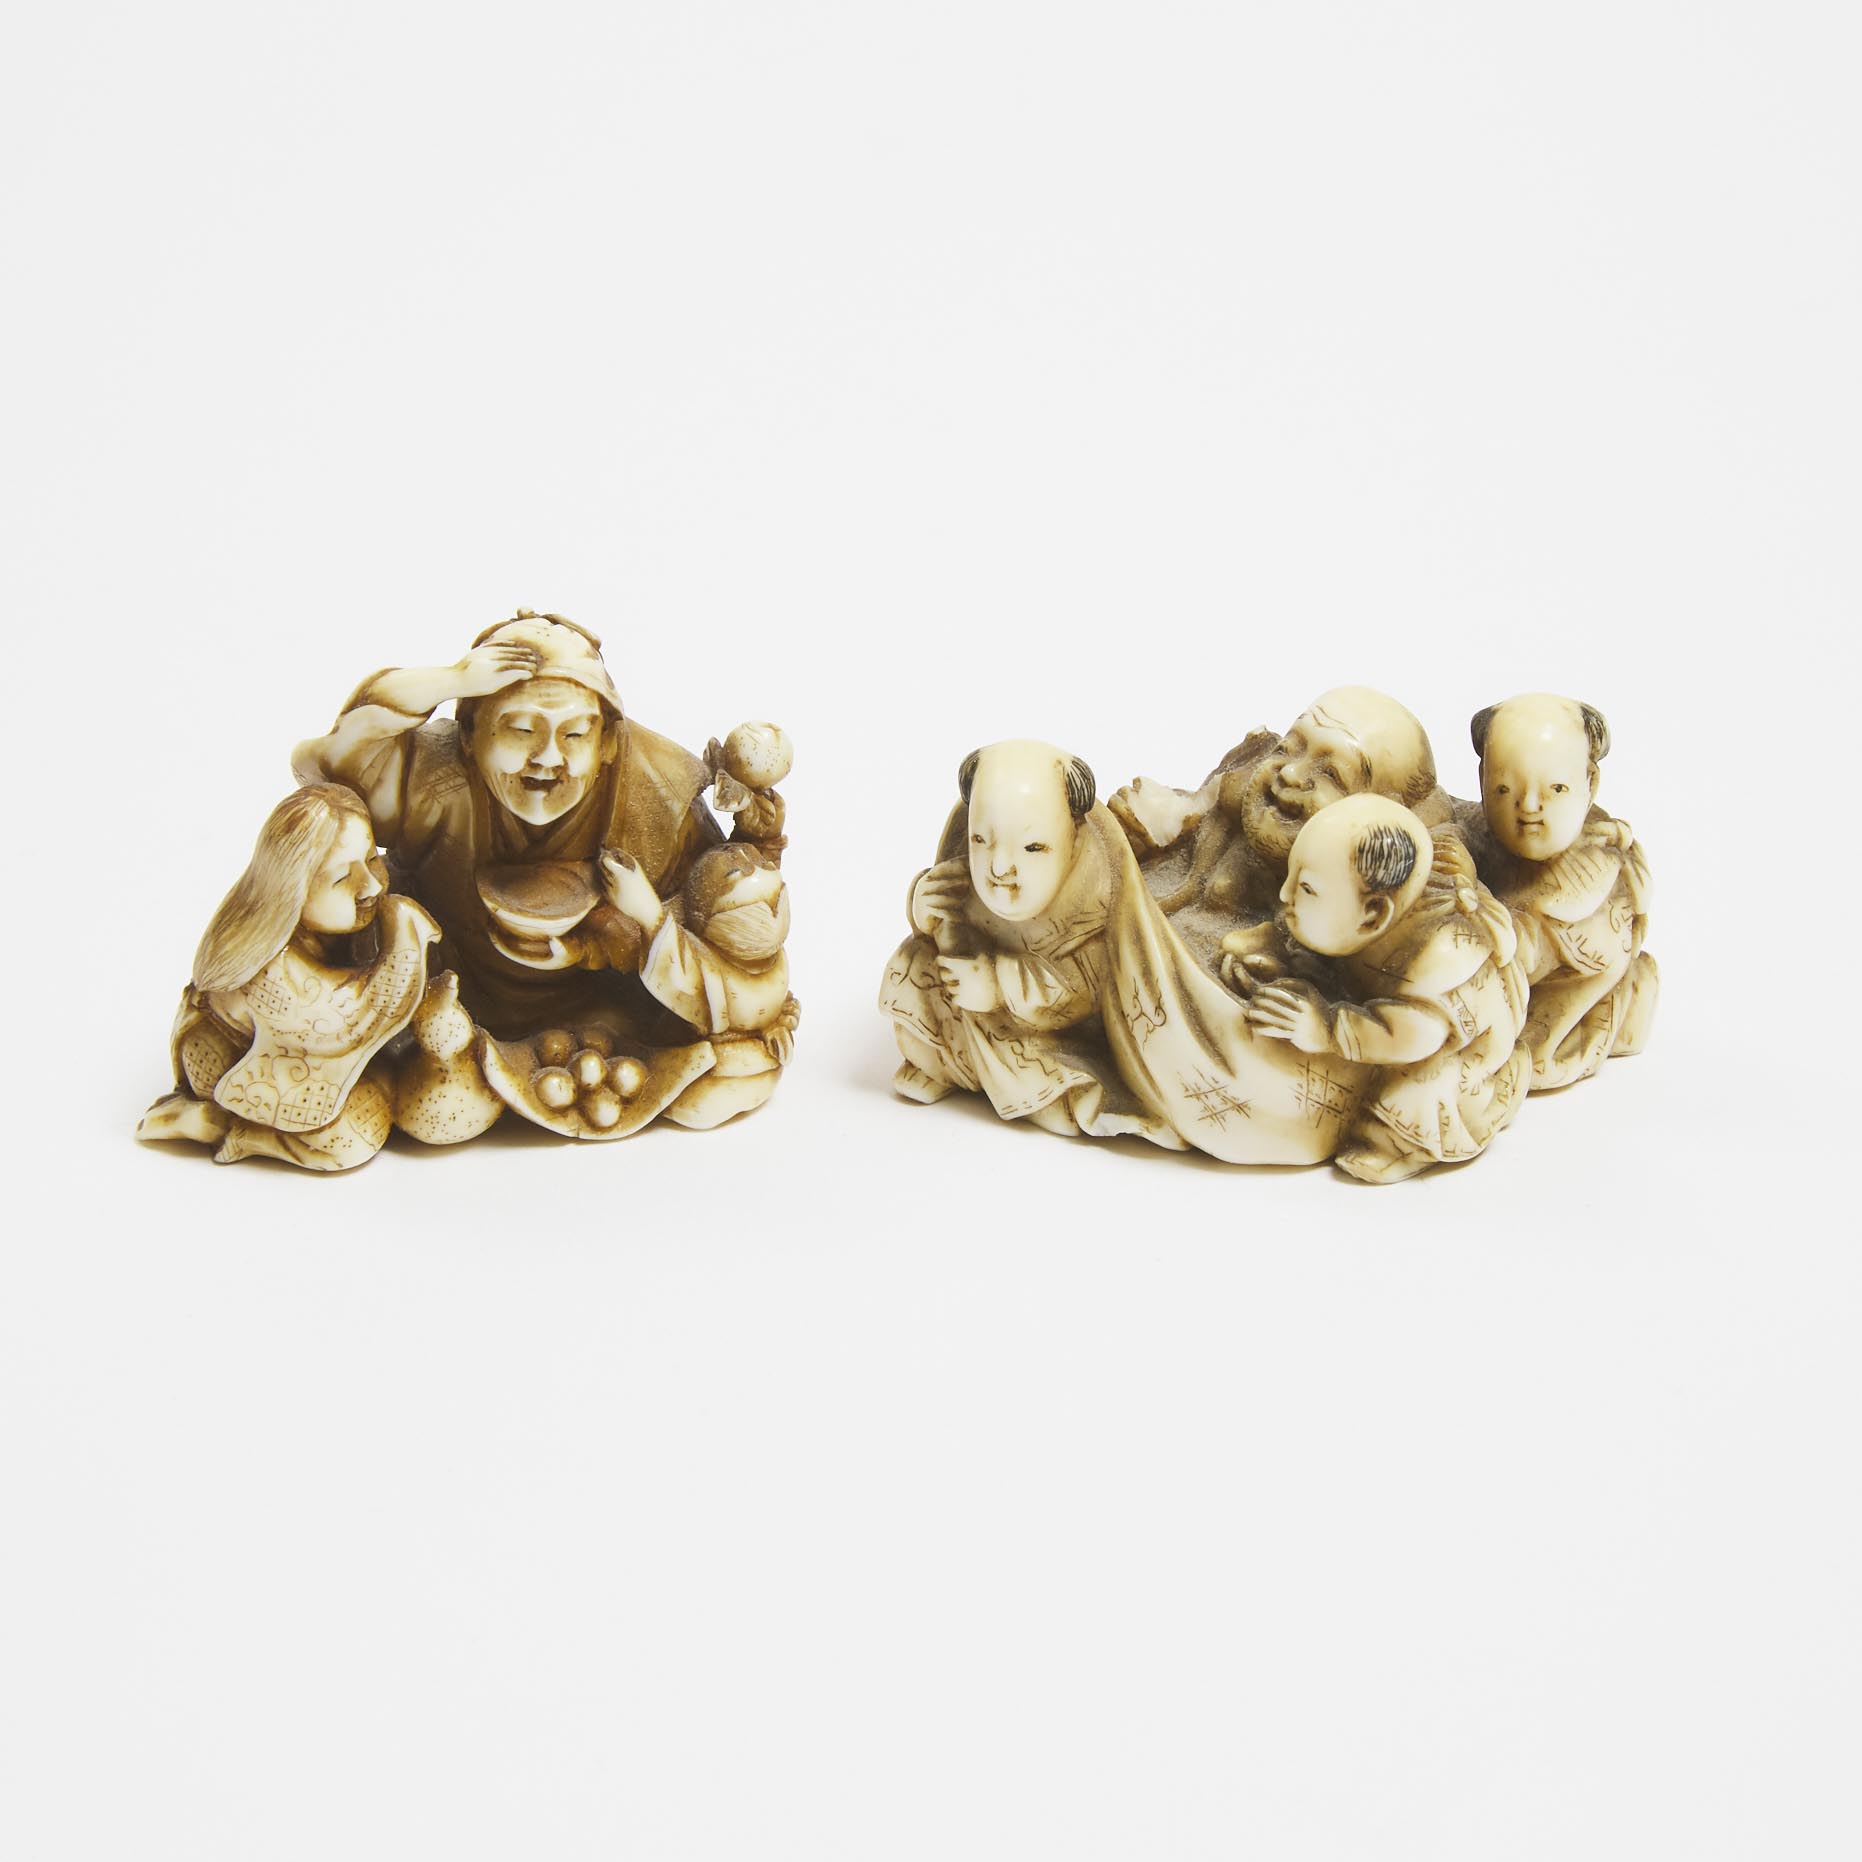 Two Ivory Figural Group Netsuke,